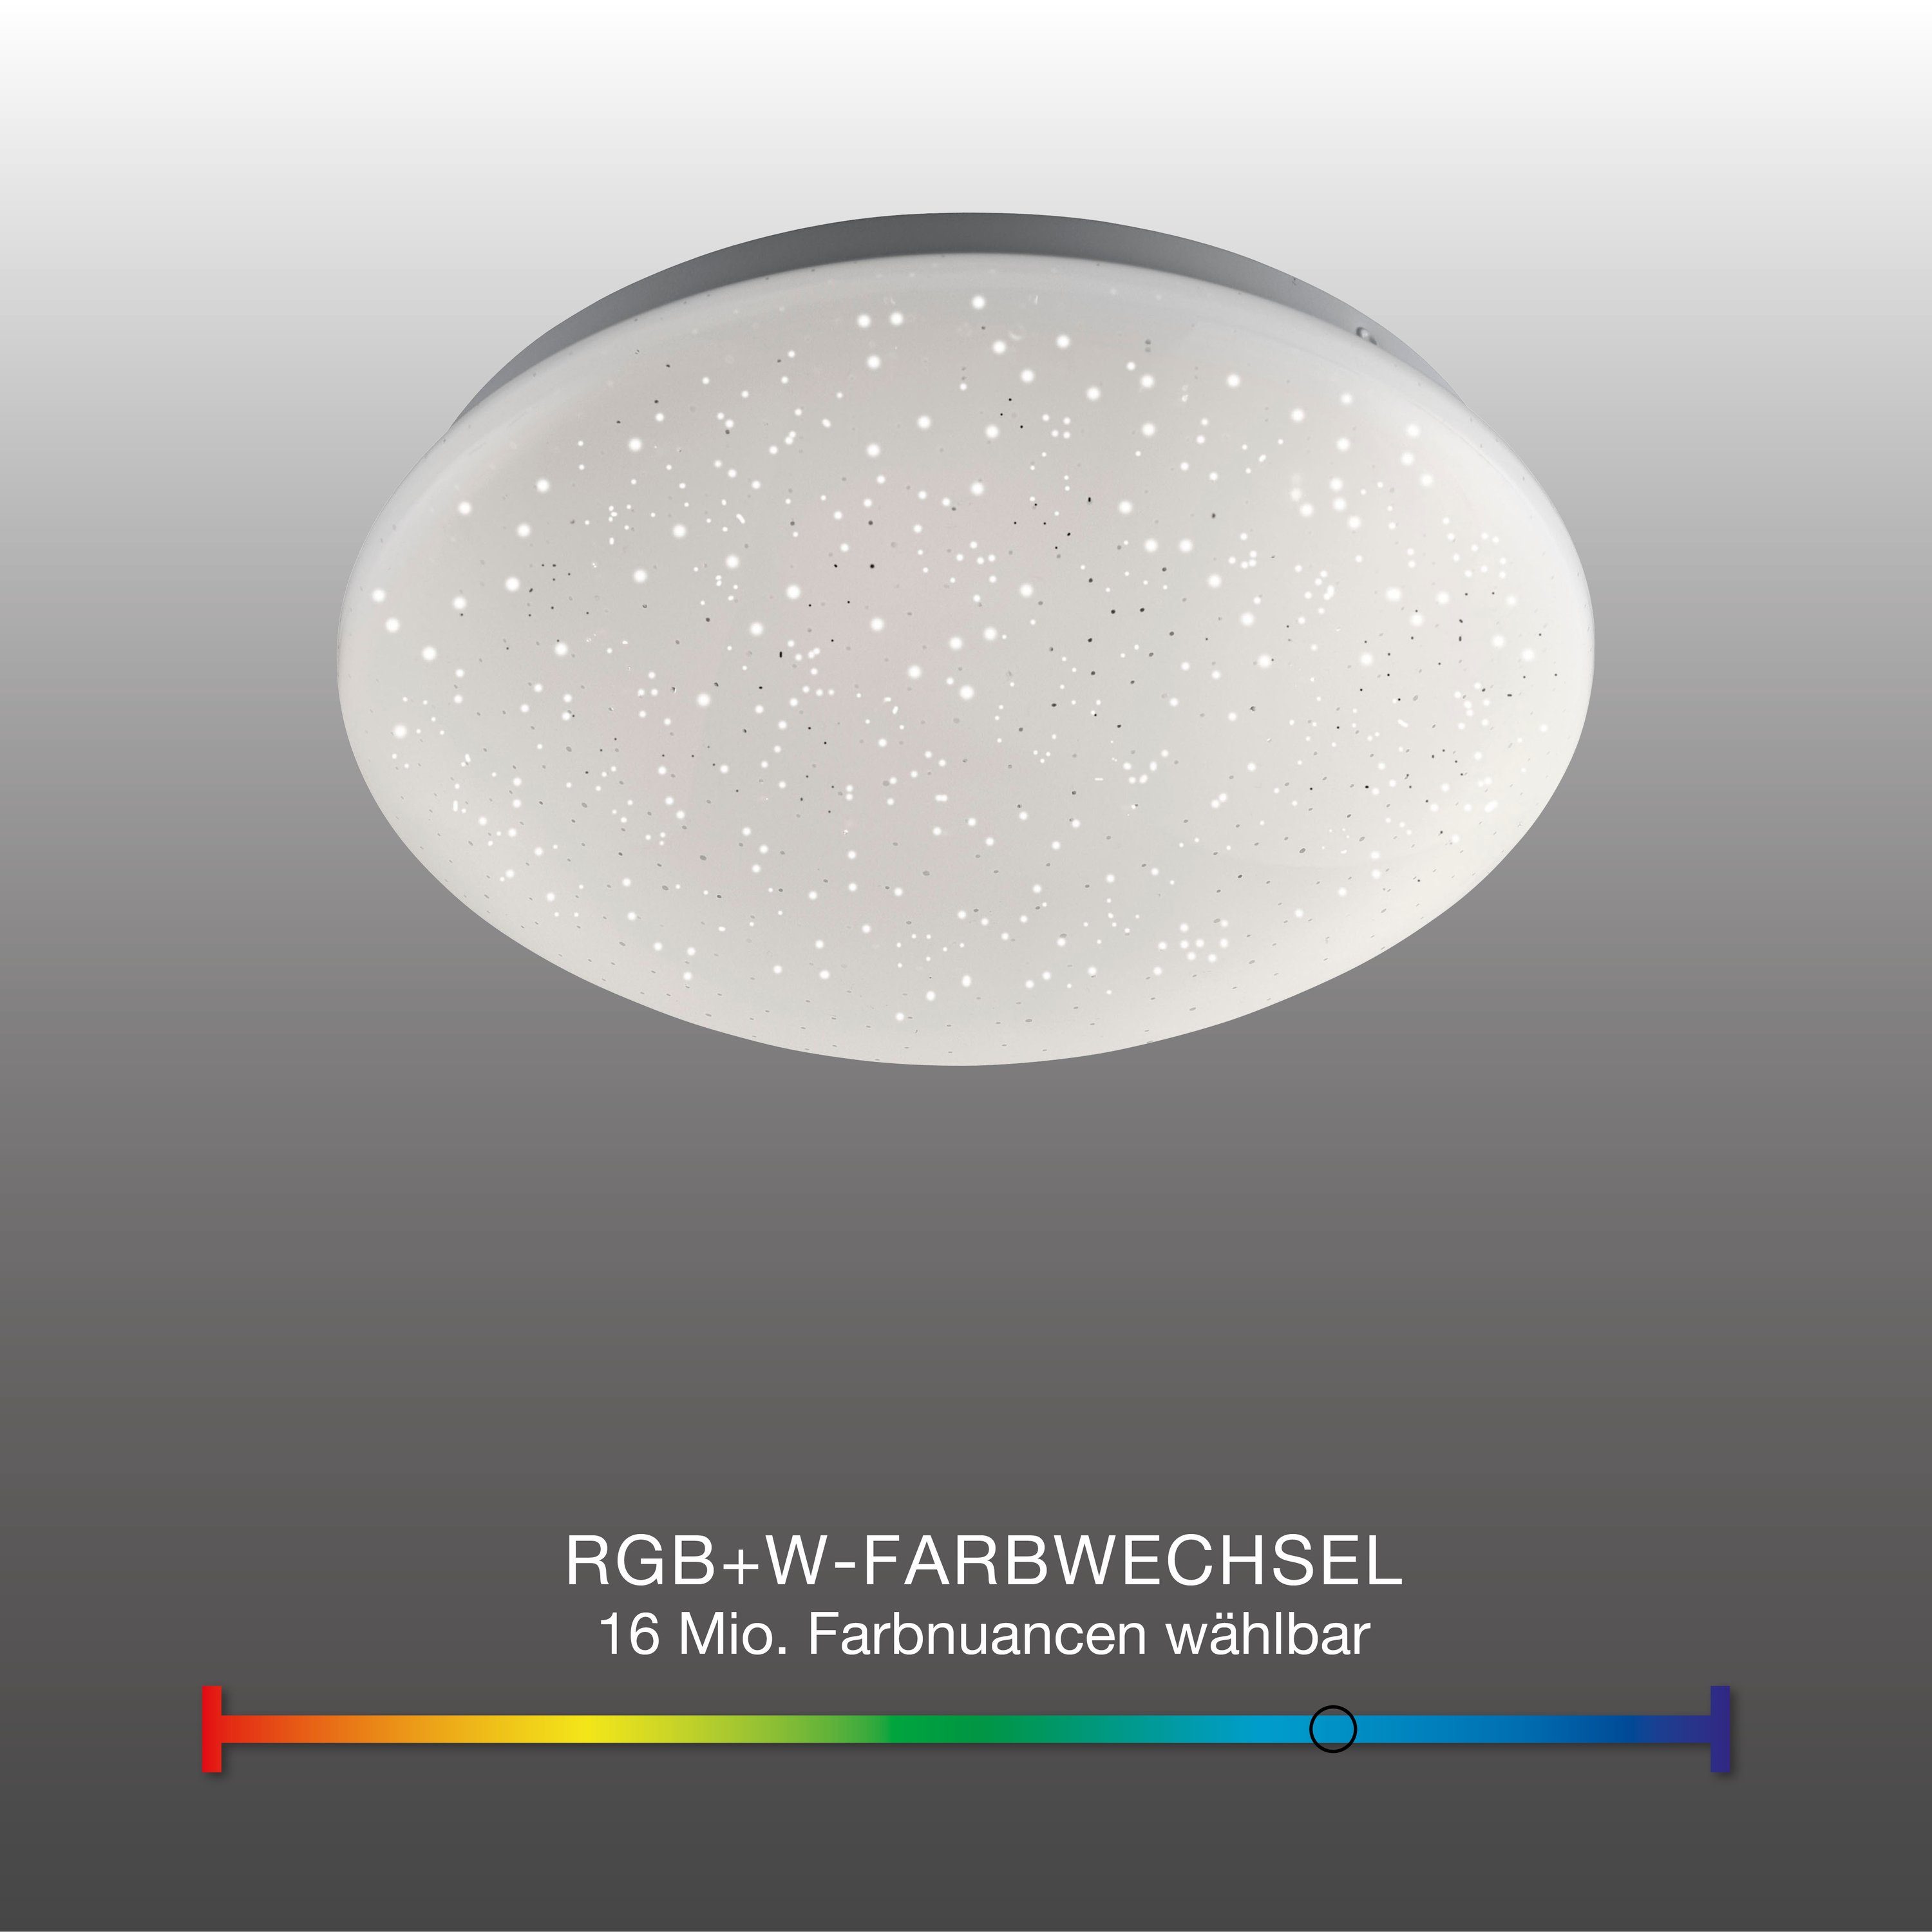 SellTec 5,60 LED RGB-Farbwechsel, / Sternenhimmel, warmweiss, Deckenlampe Farbwechsel, Kinderzimmer über dimmbar, RGB Watt, LED dimmbar 1xLED-Board Fernbedienung, Fernbedienung, Deckenleuchte Farbwechsel